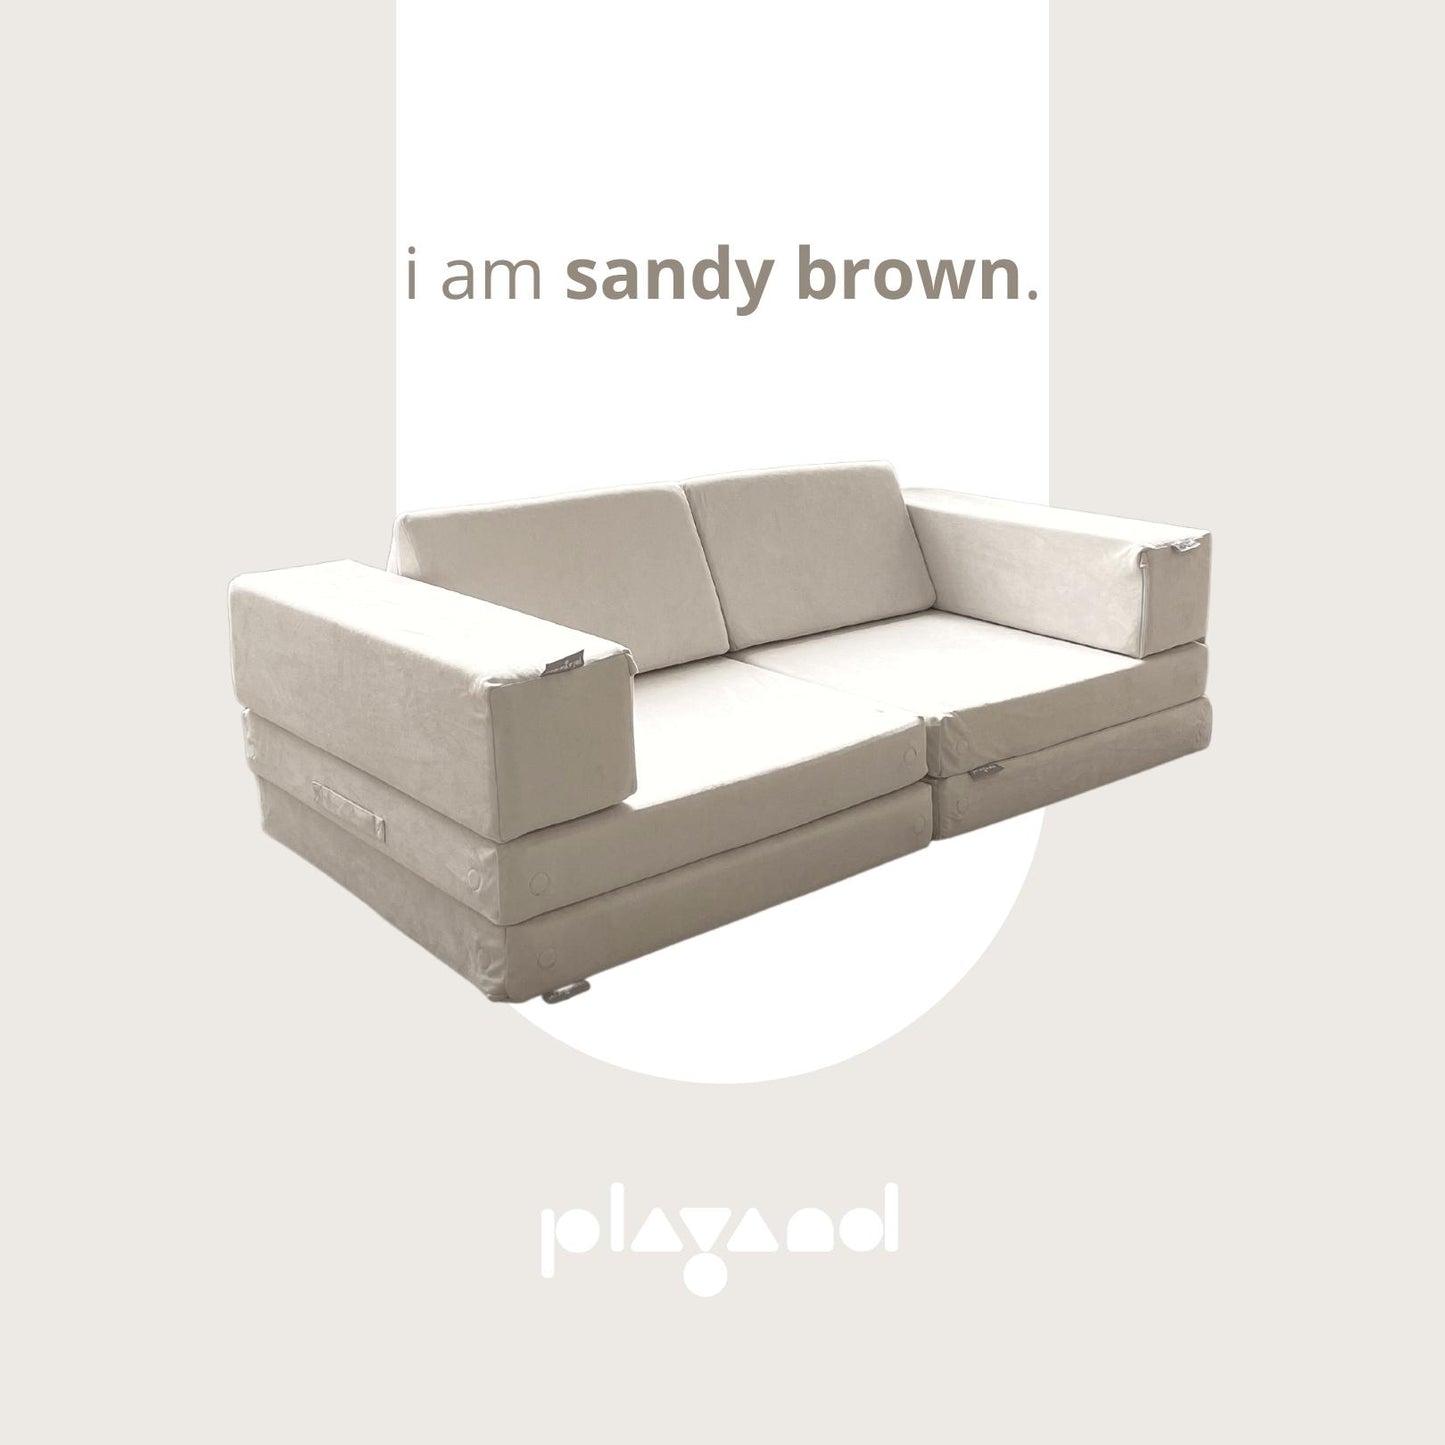 Playand Modular Kids Sofa In Sandy Brown